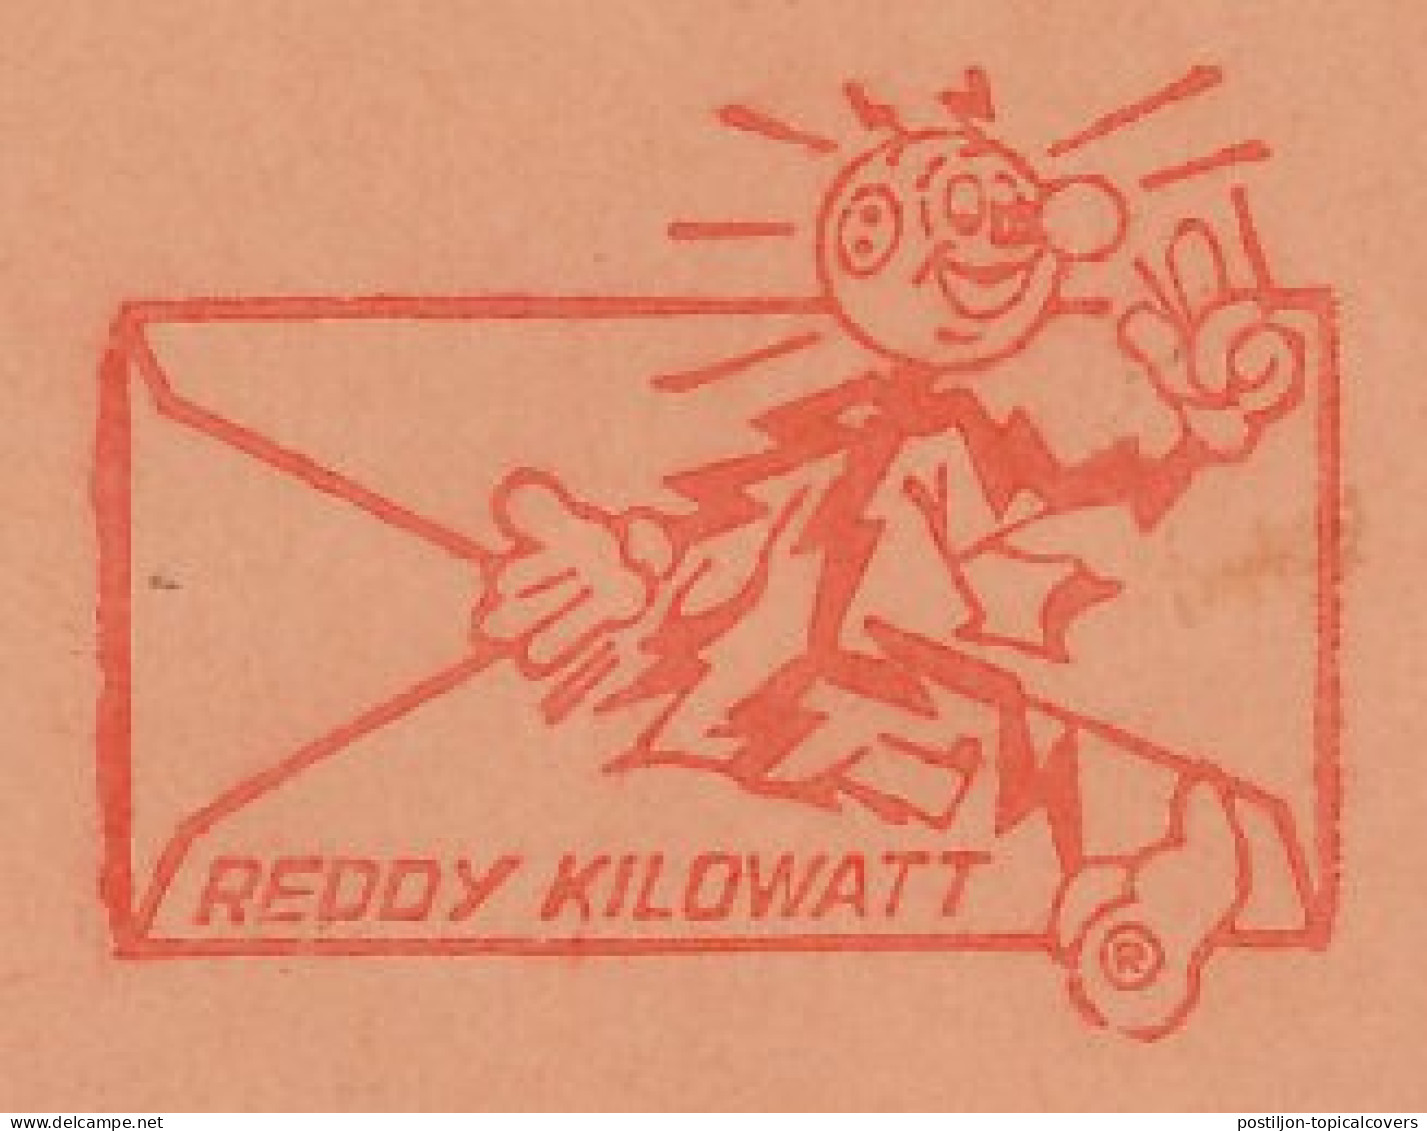 Meter Cut Belgium 1986 Reddy Kilowatt - Elektriciteit